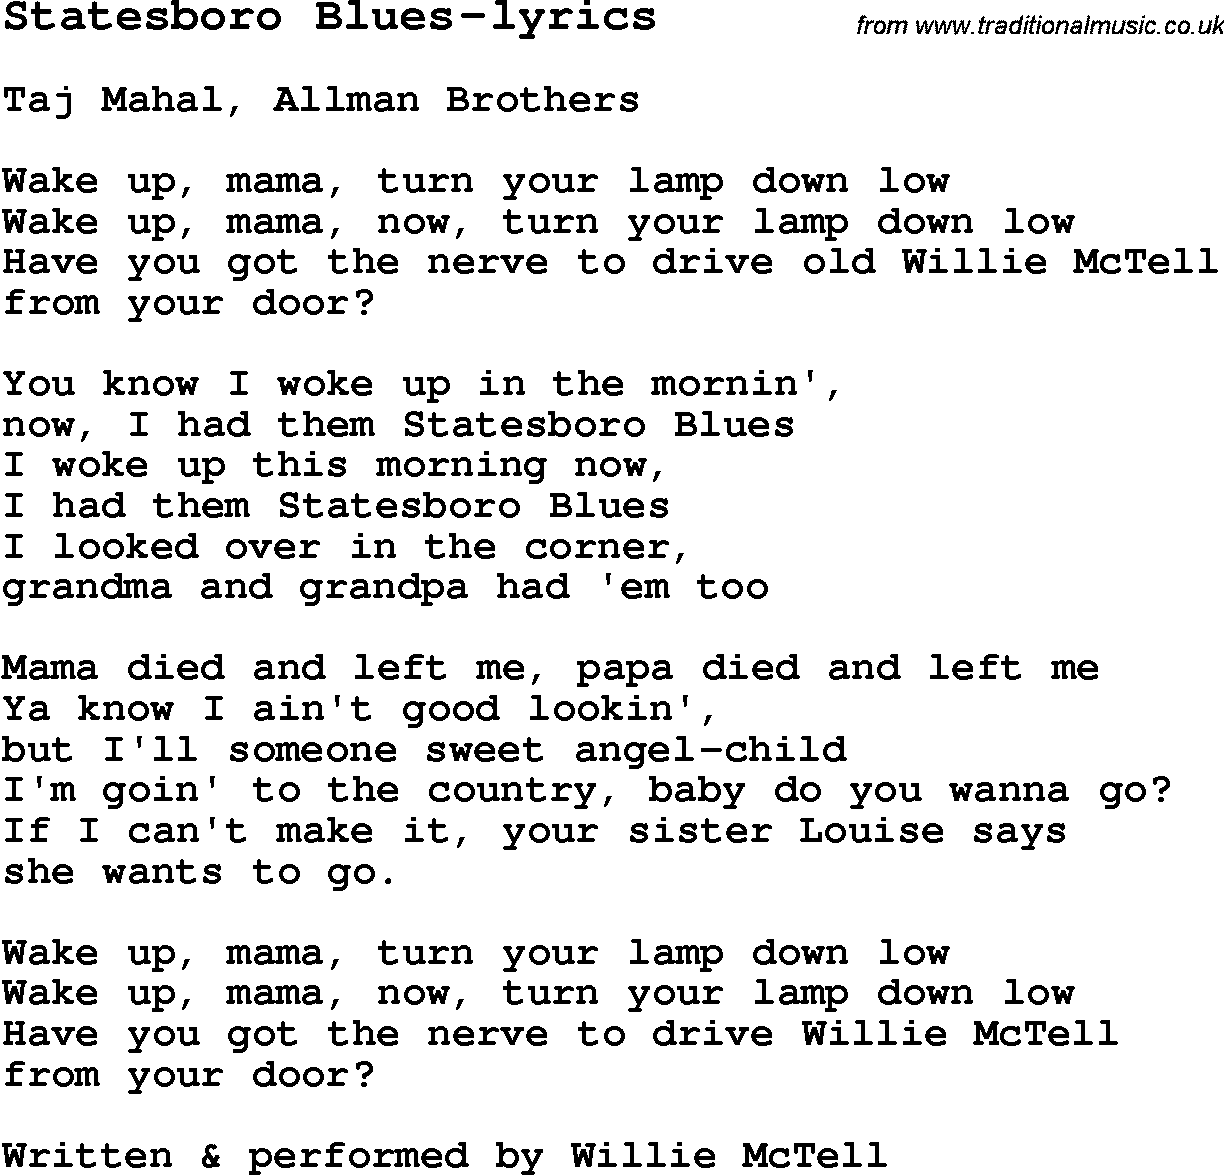 Blues Guitar Song, lyrics, chords, tablature, playing hints for Statesboro Blues-lyrics